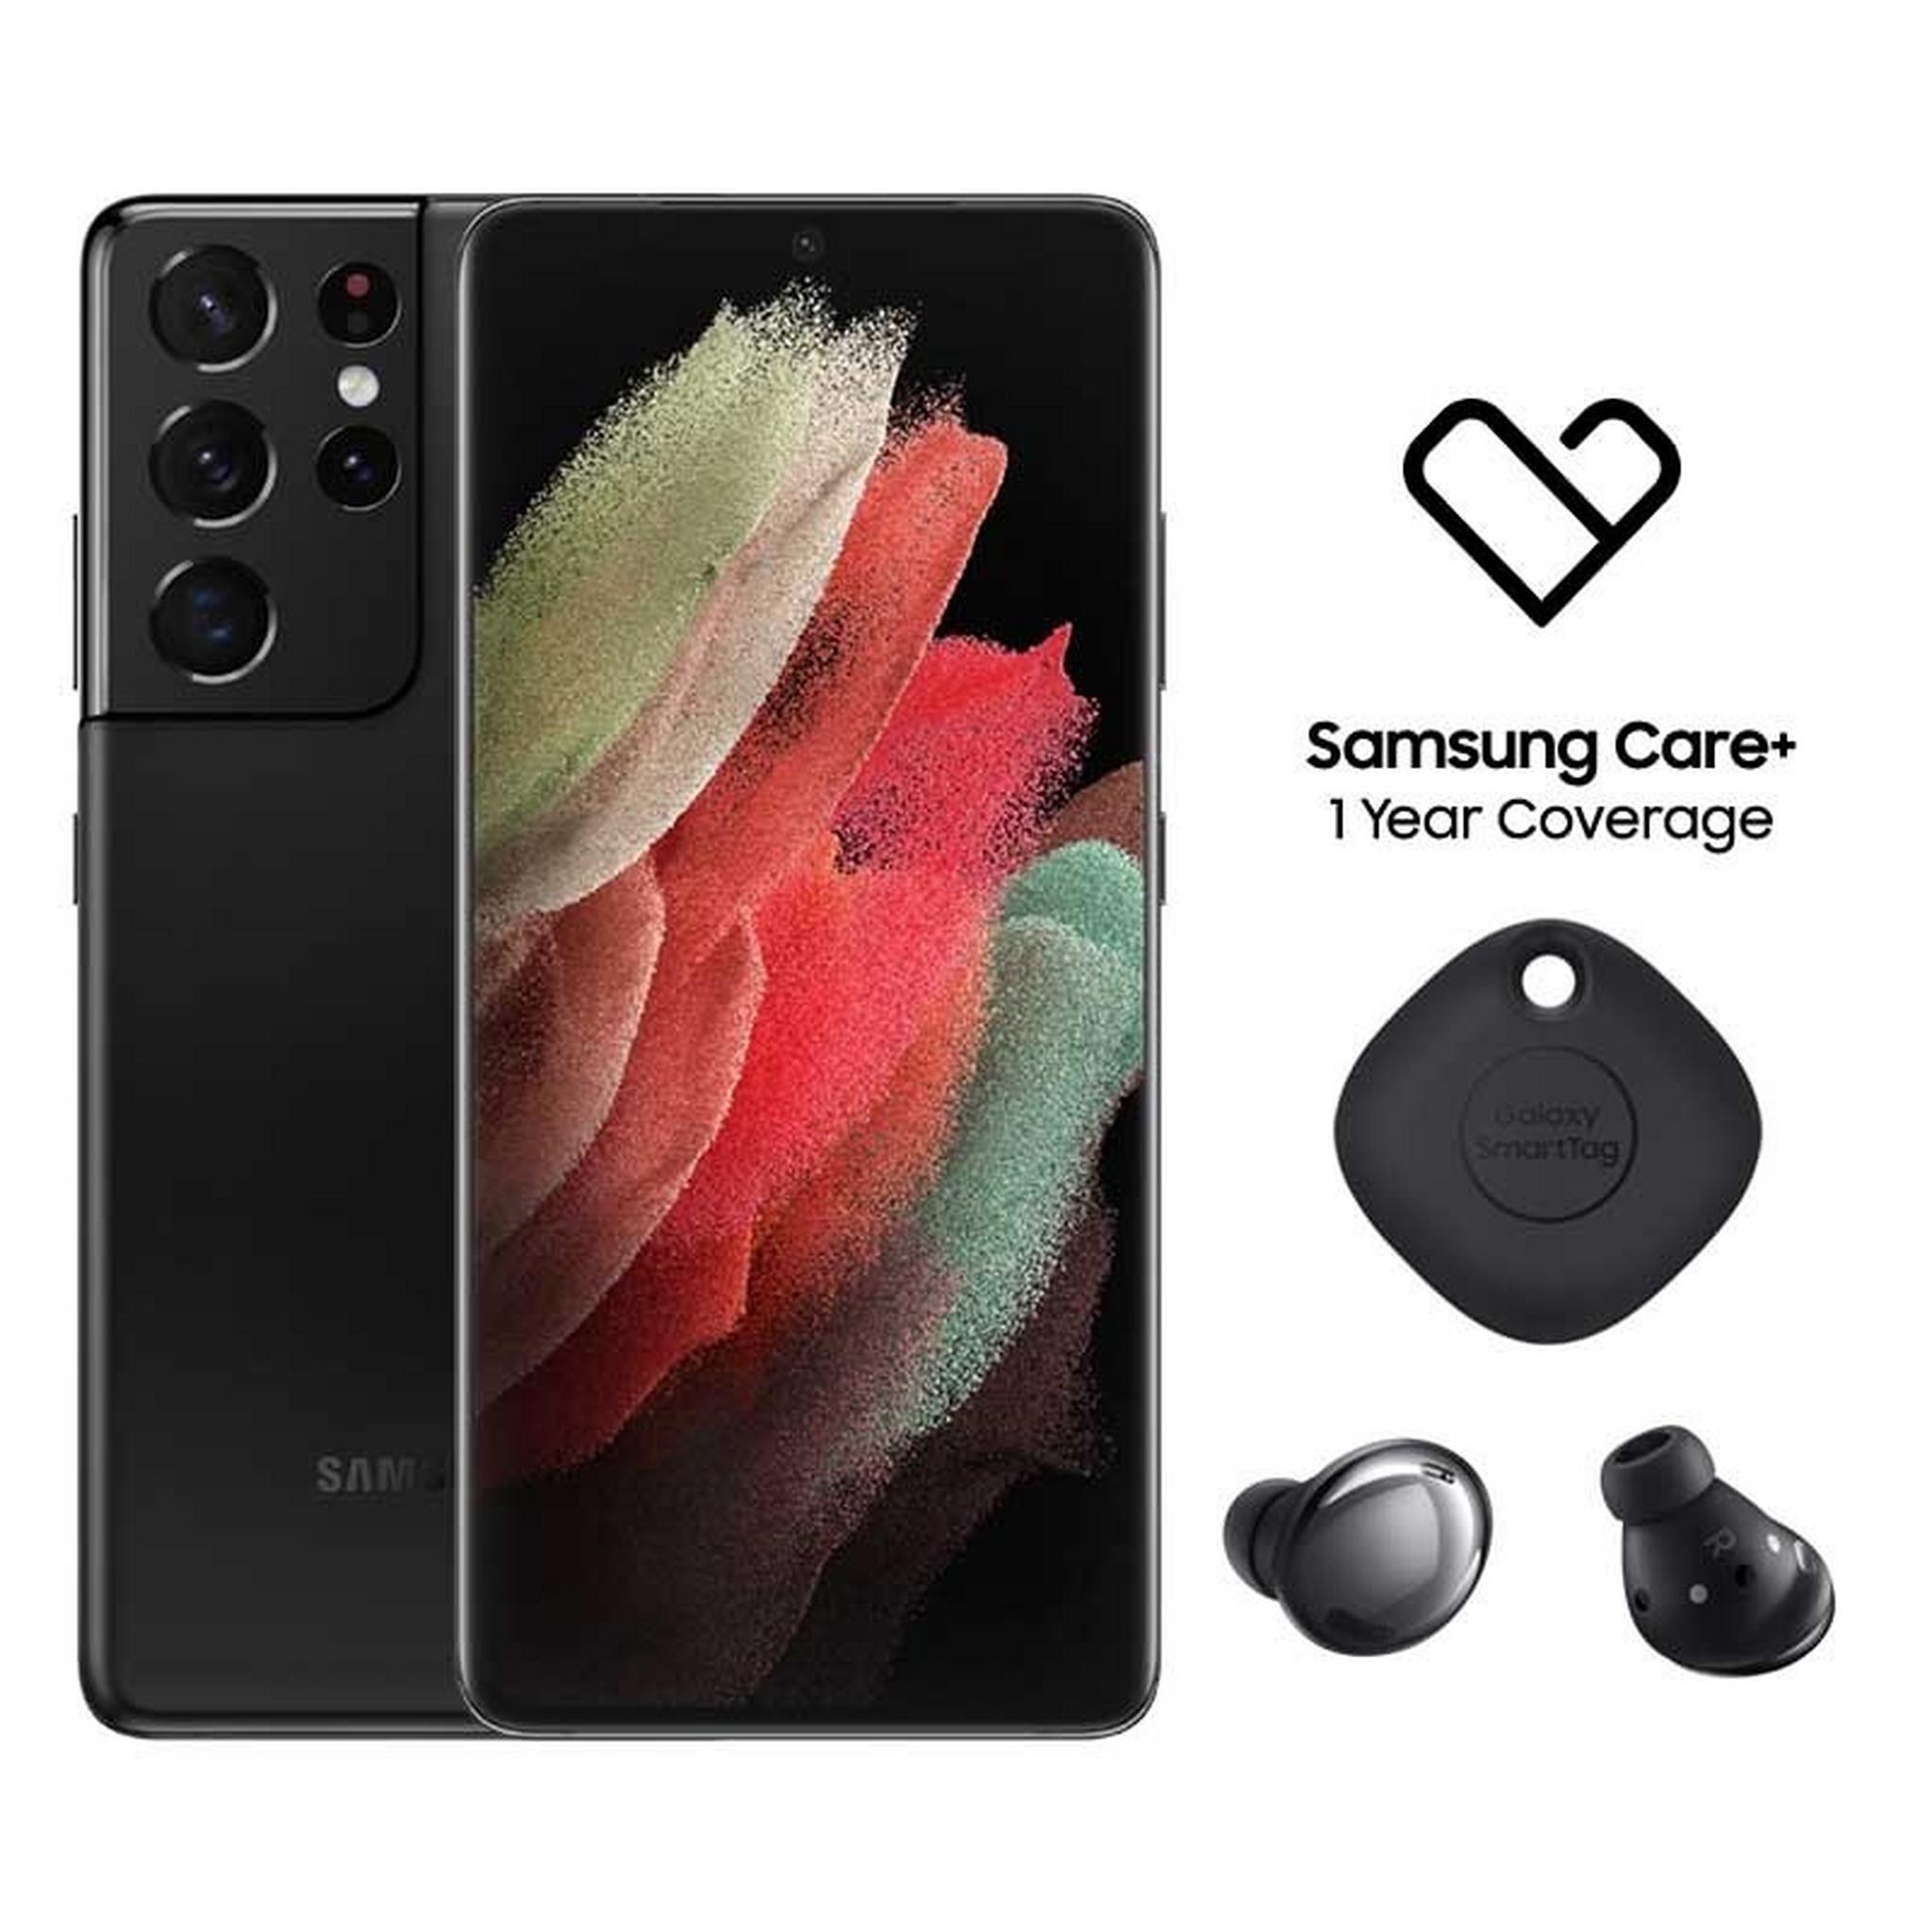 Pre-Order: Samsung Galaxy S21 Ultra 5G 256GB Phone - Black